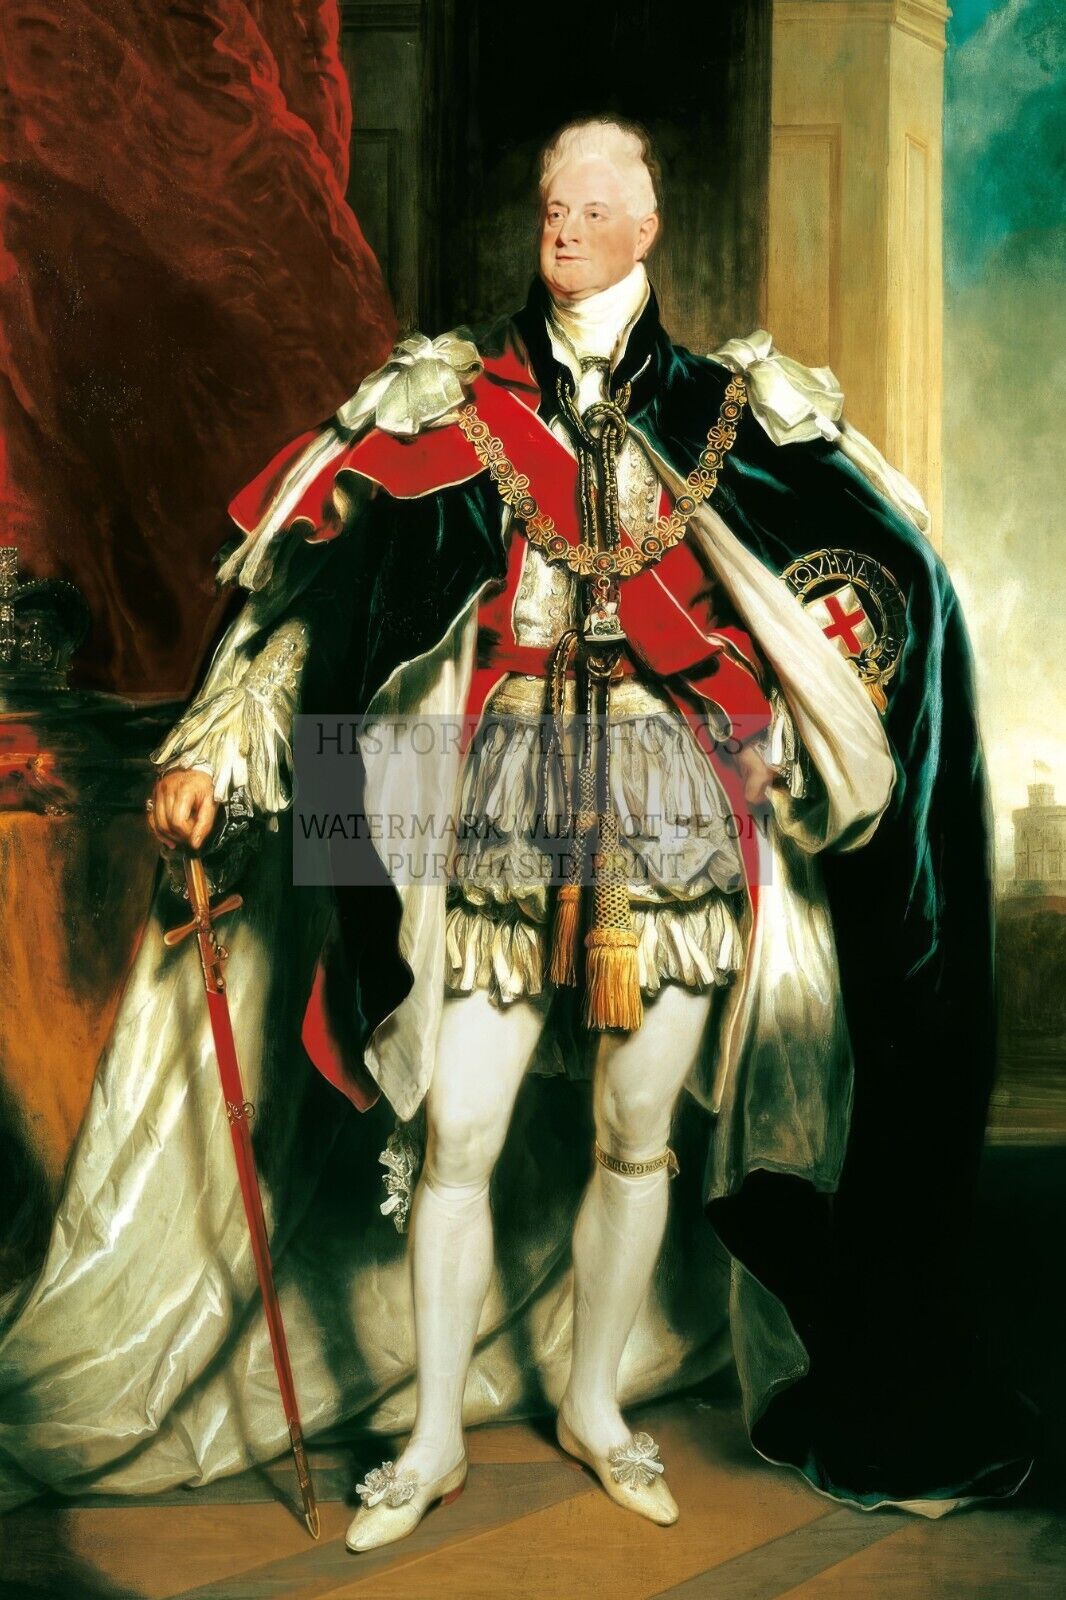 KING WILLIAM IV OF ENGLAND ROYALTY 4X6 PHOTO POSTCARD